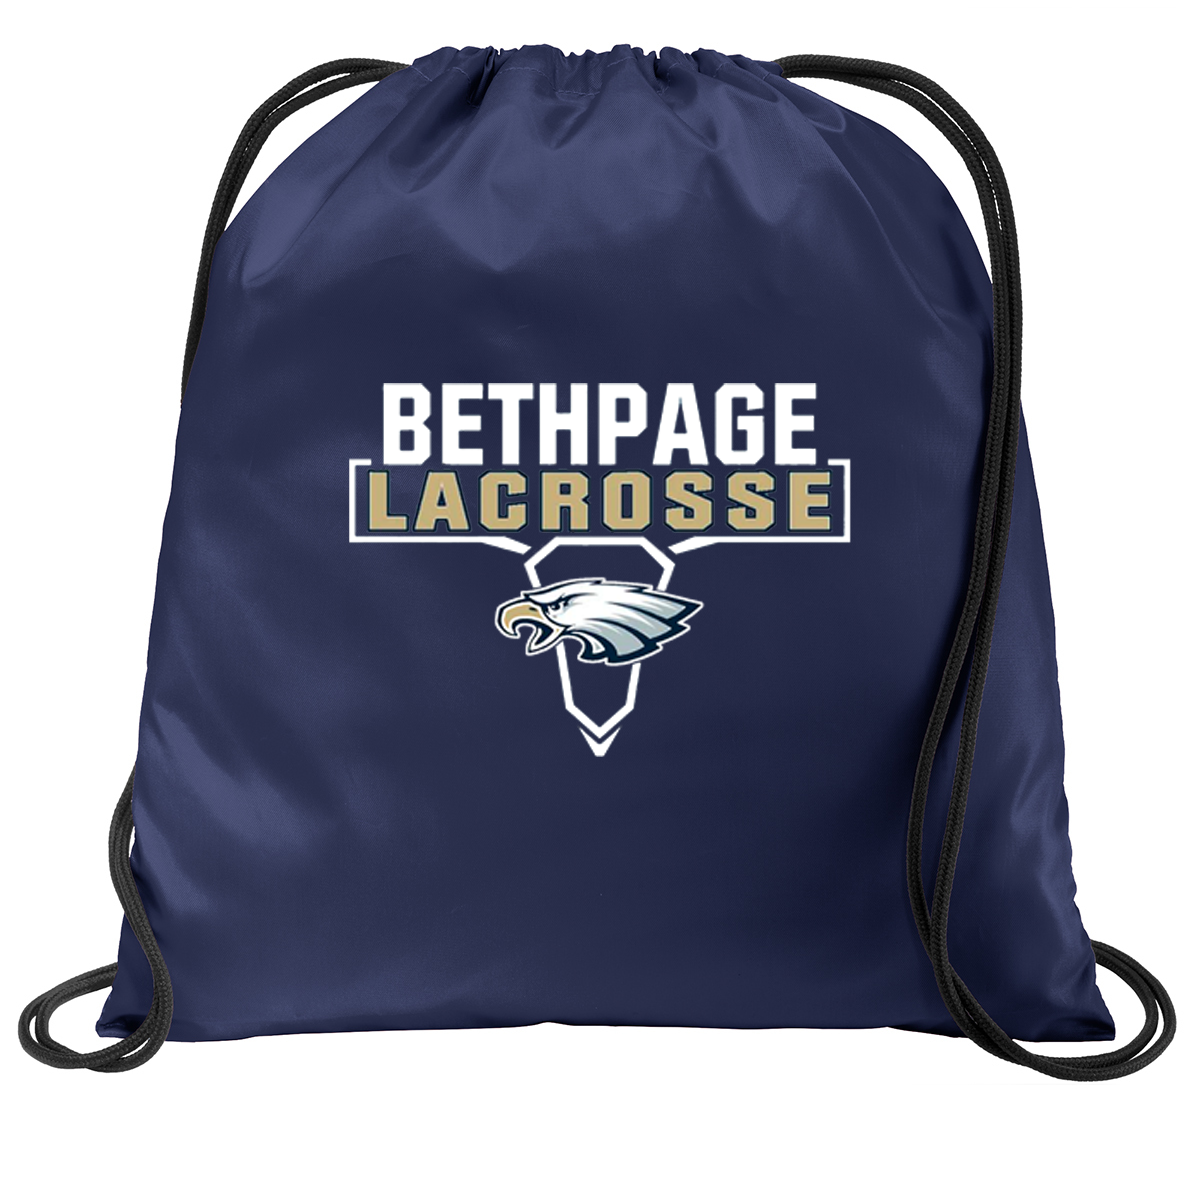 Bethpage Lacrosse Cinch Pack